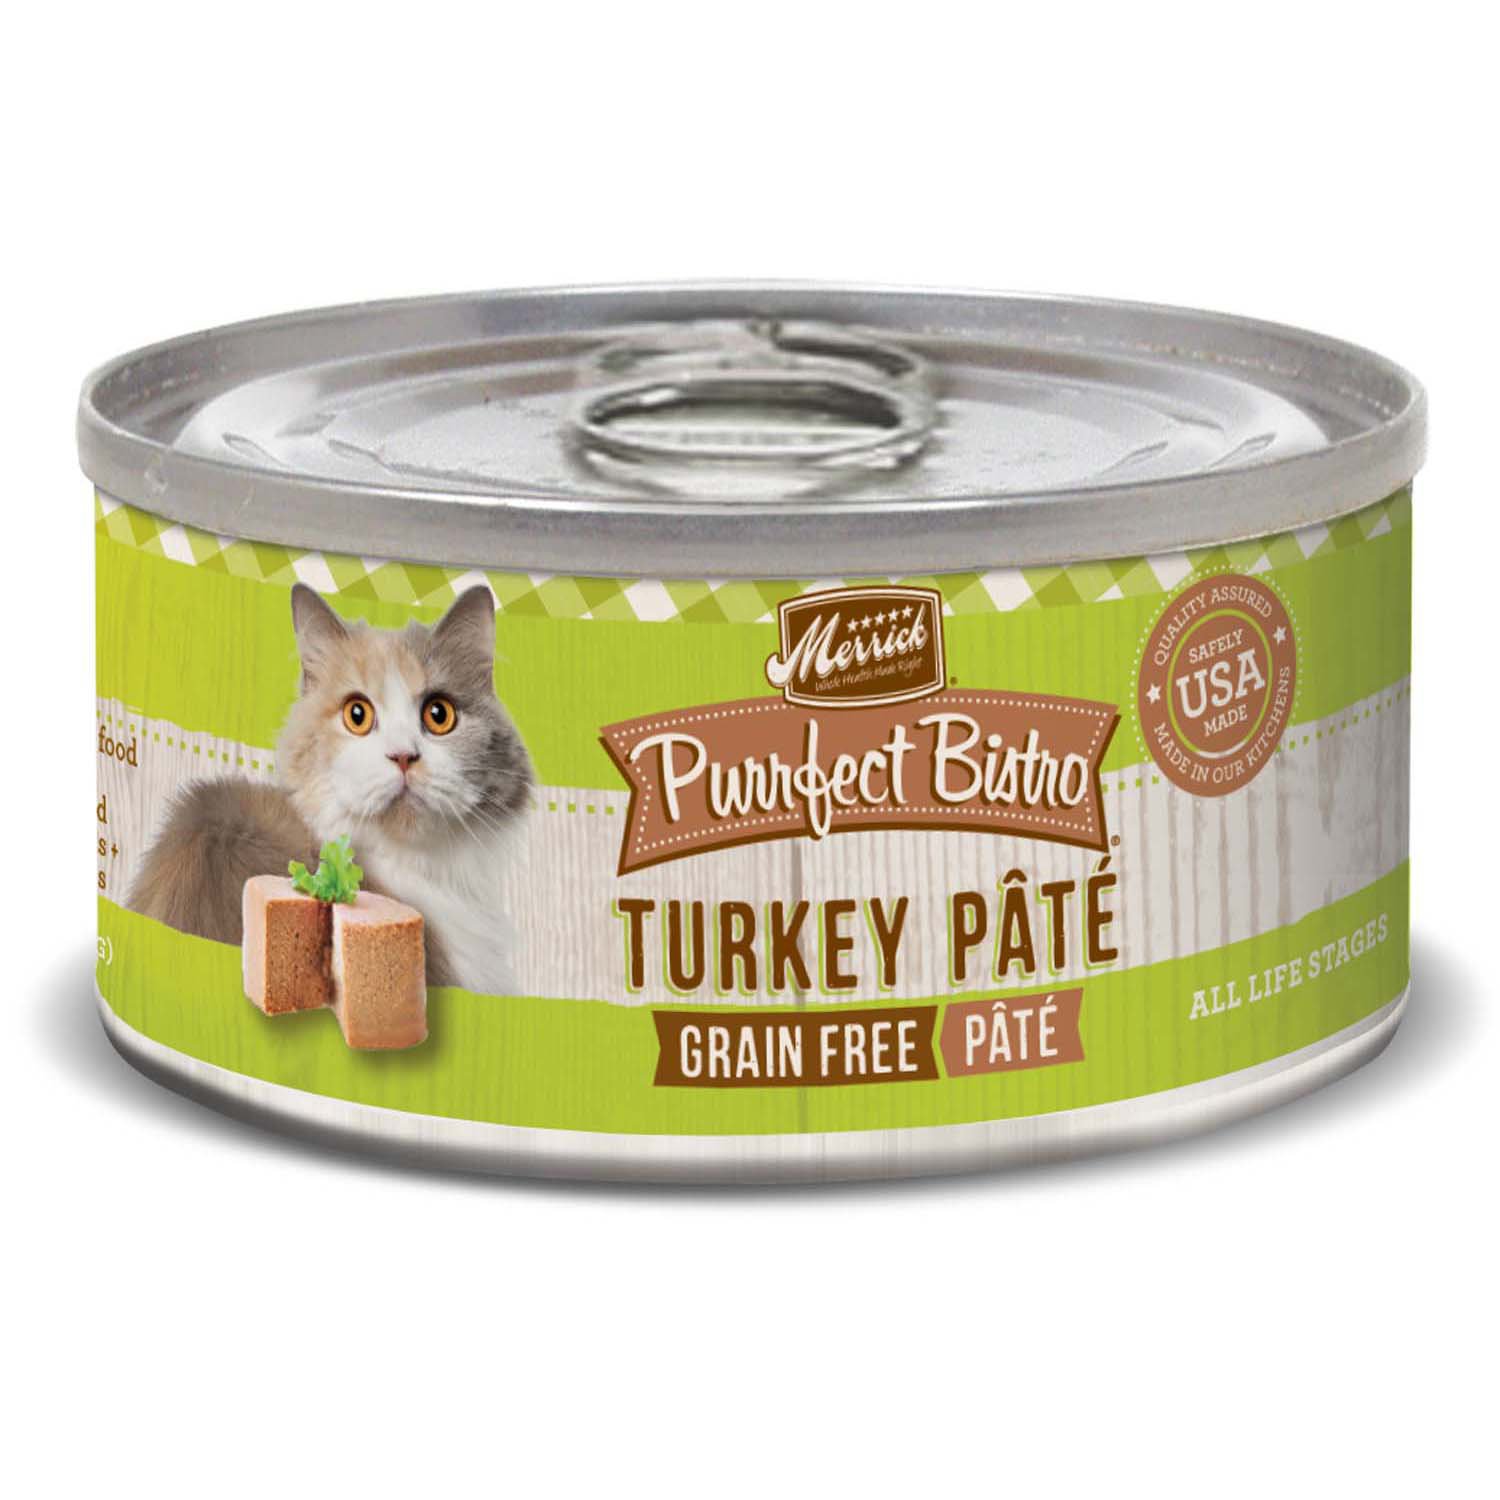 Merrick Purrfect Bistro Grain Free Turkey Pate Wet Cat Food, 3 oz., Case of 24 Petco